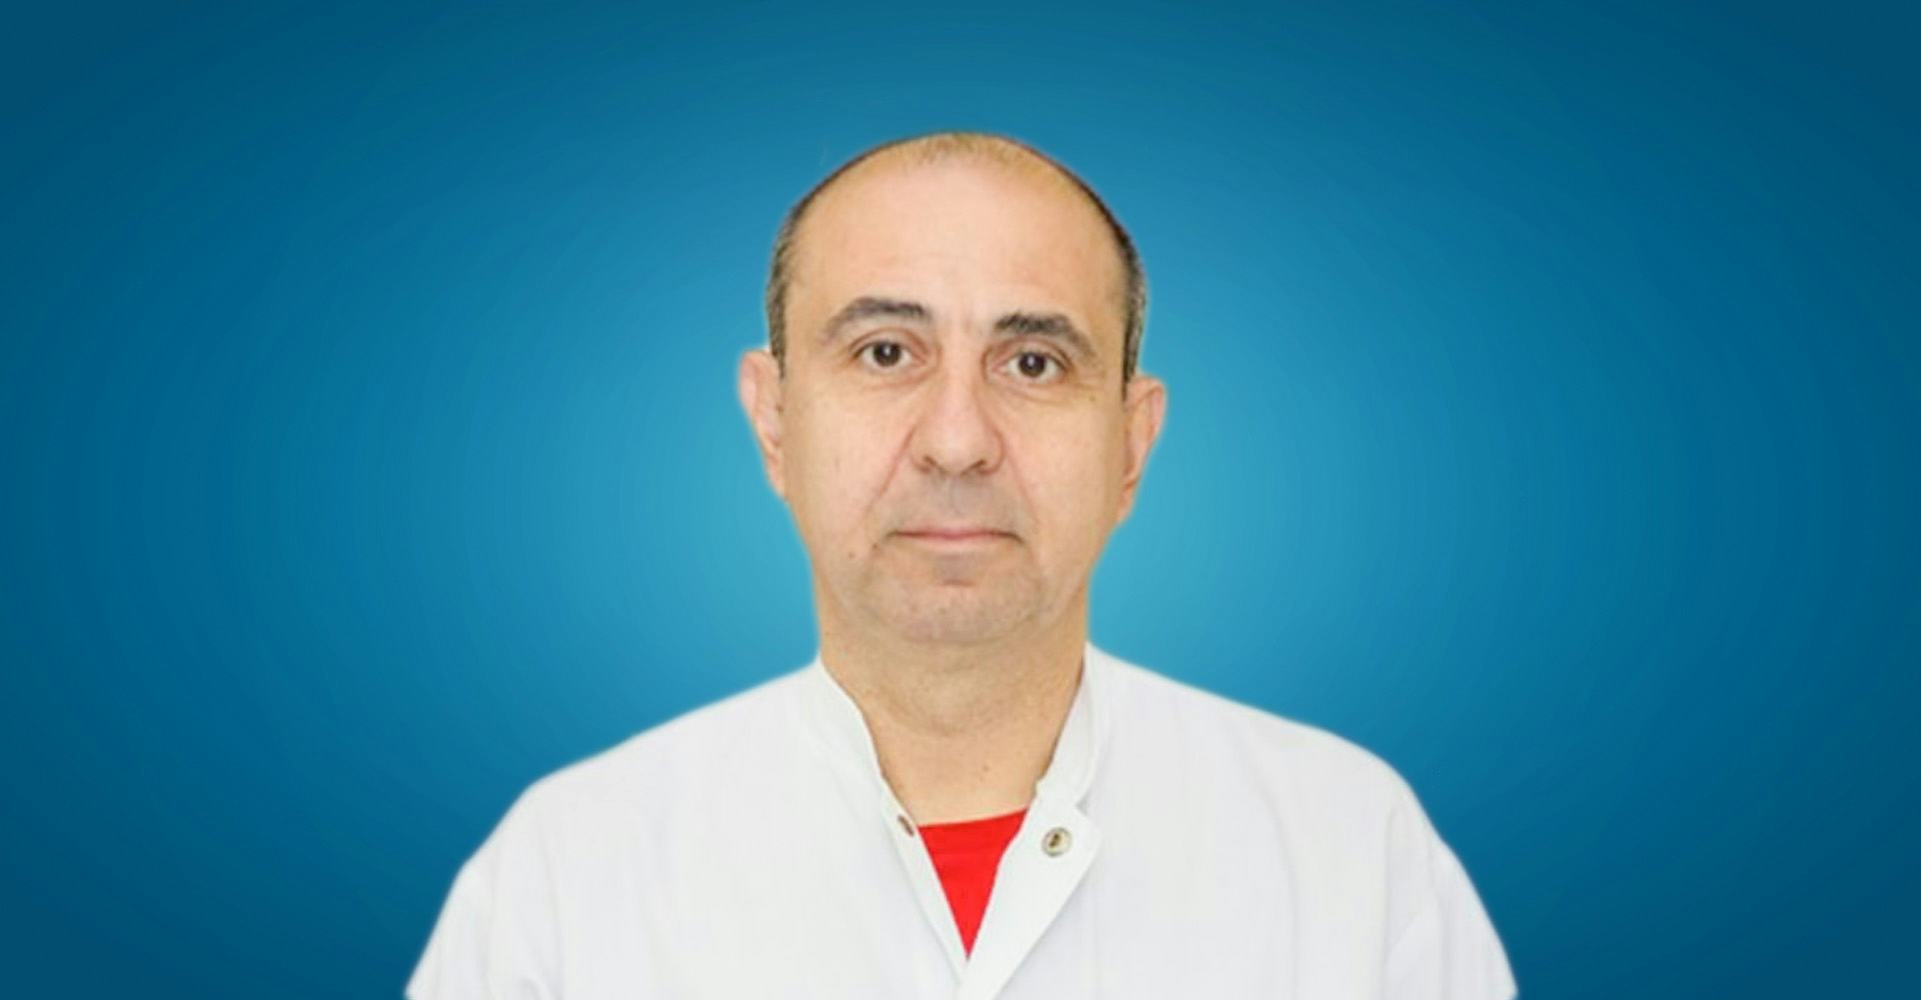 Dr. Ciprian Cristescu